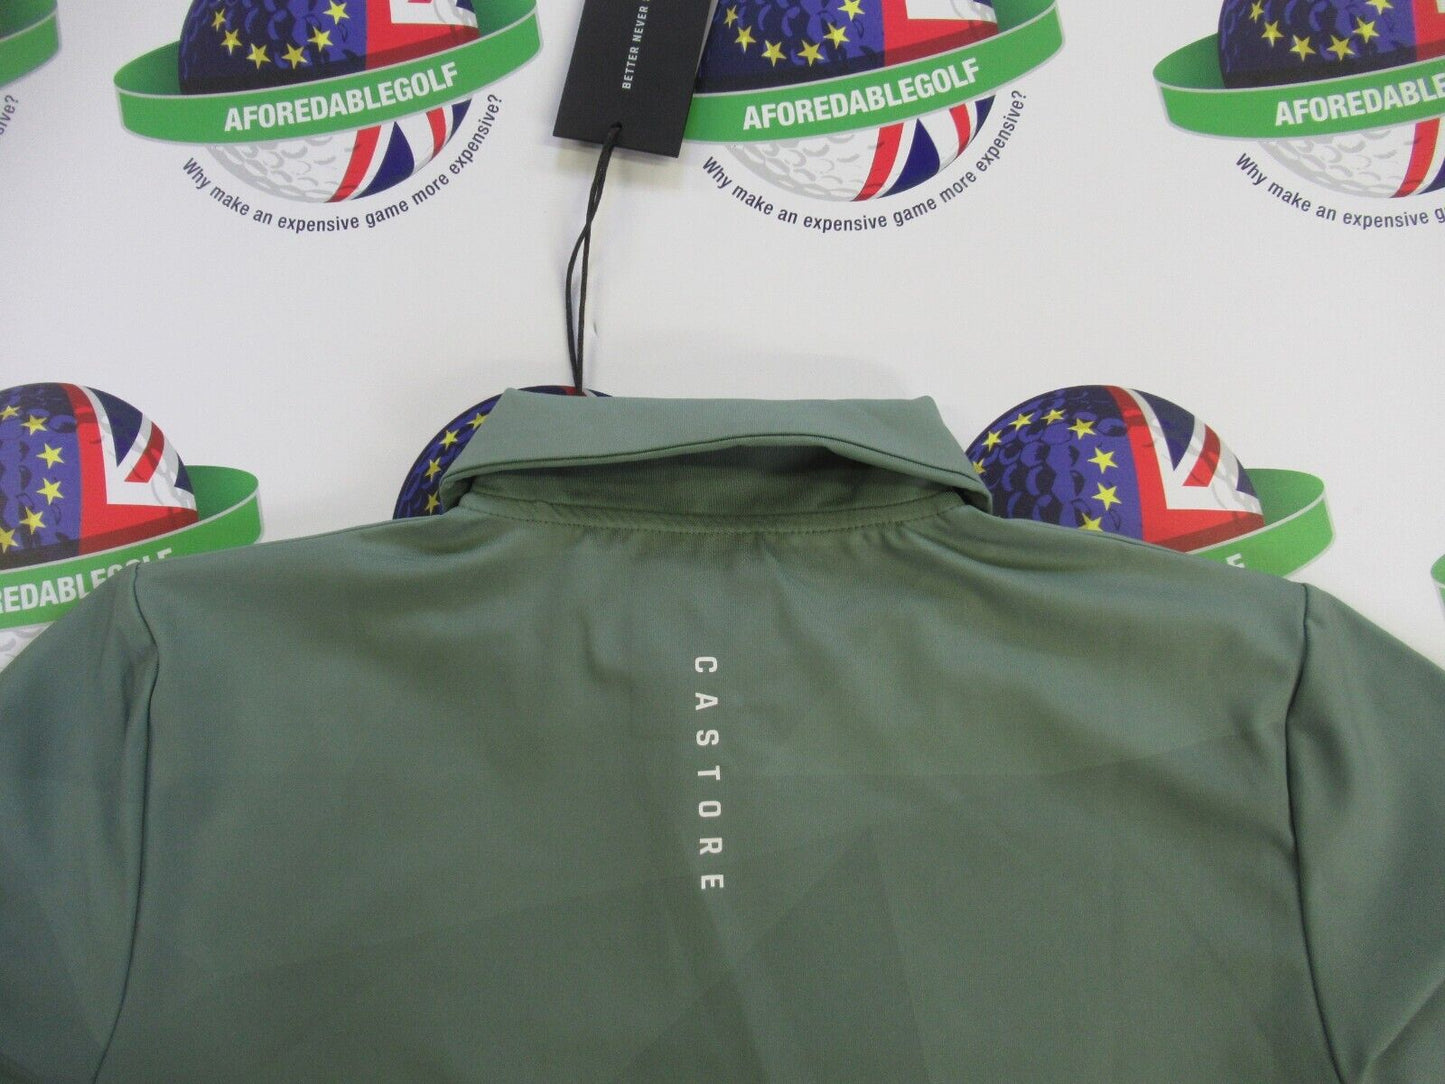 castore golf mens printed polo shirt hunter green uk size xxl